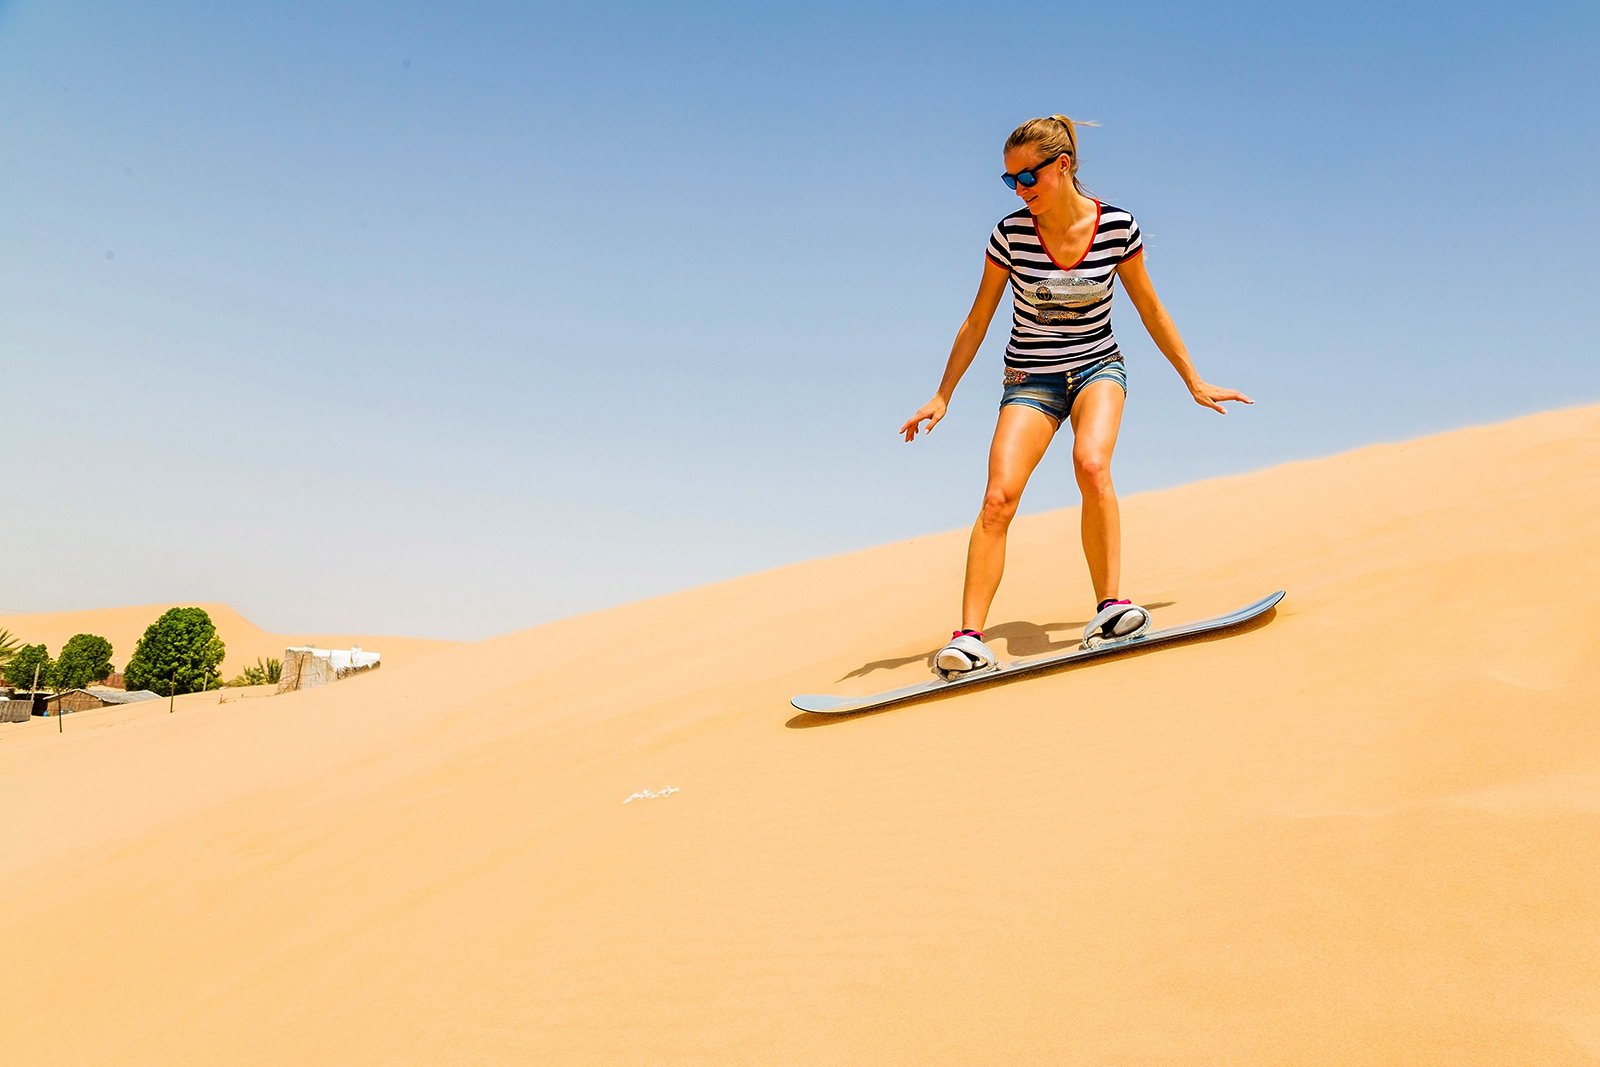 How to try sandboarding on sand dunes in Dubai